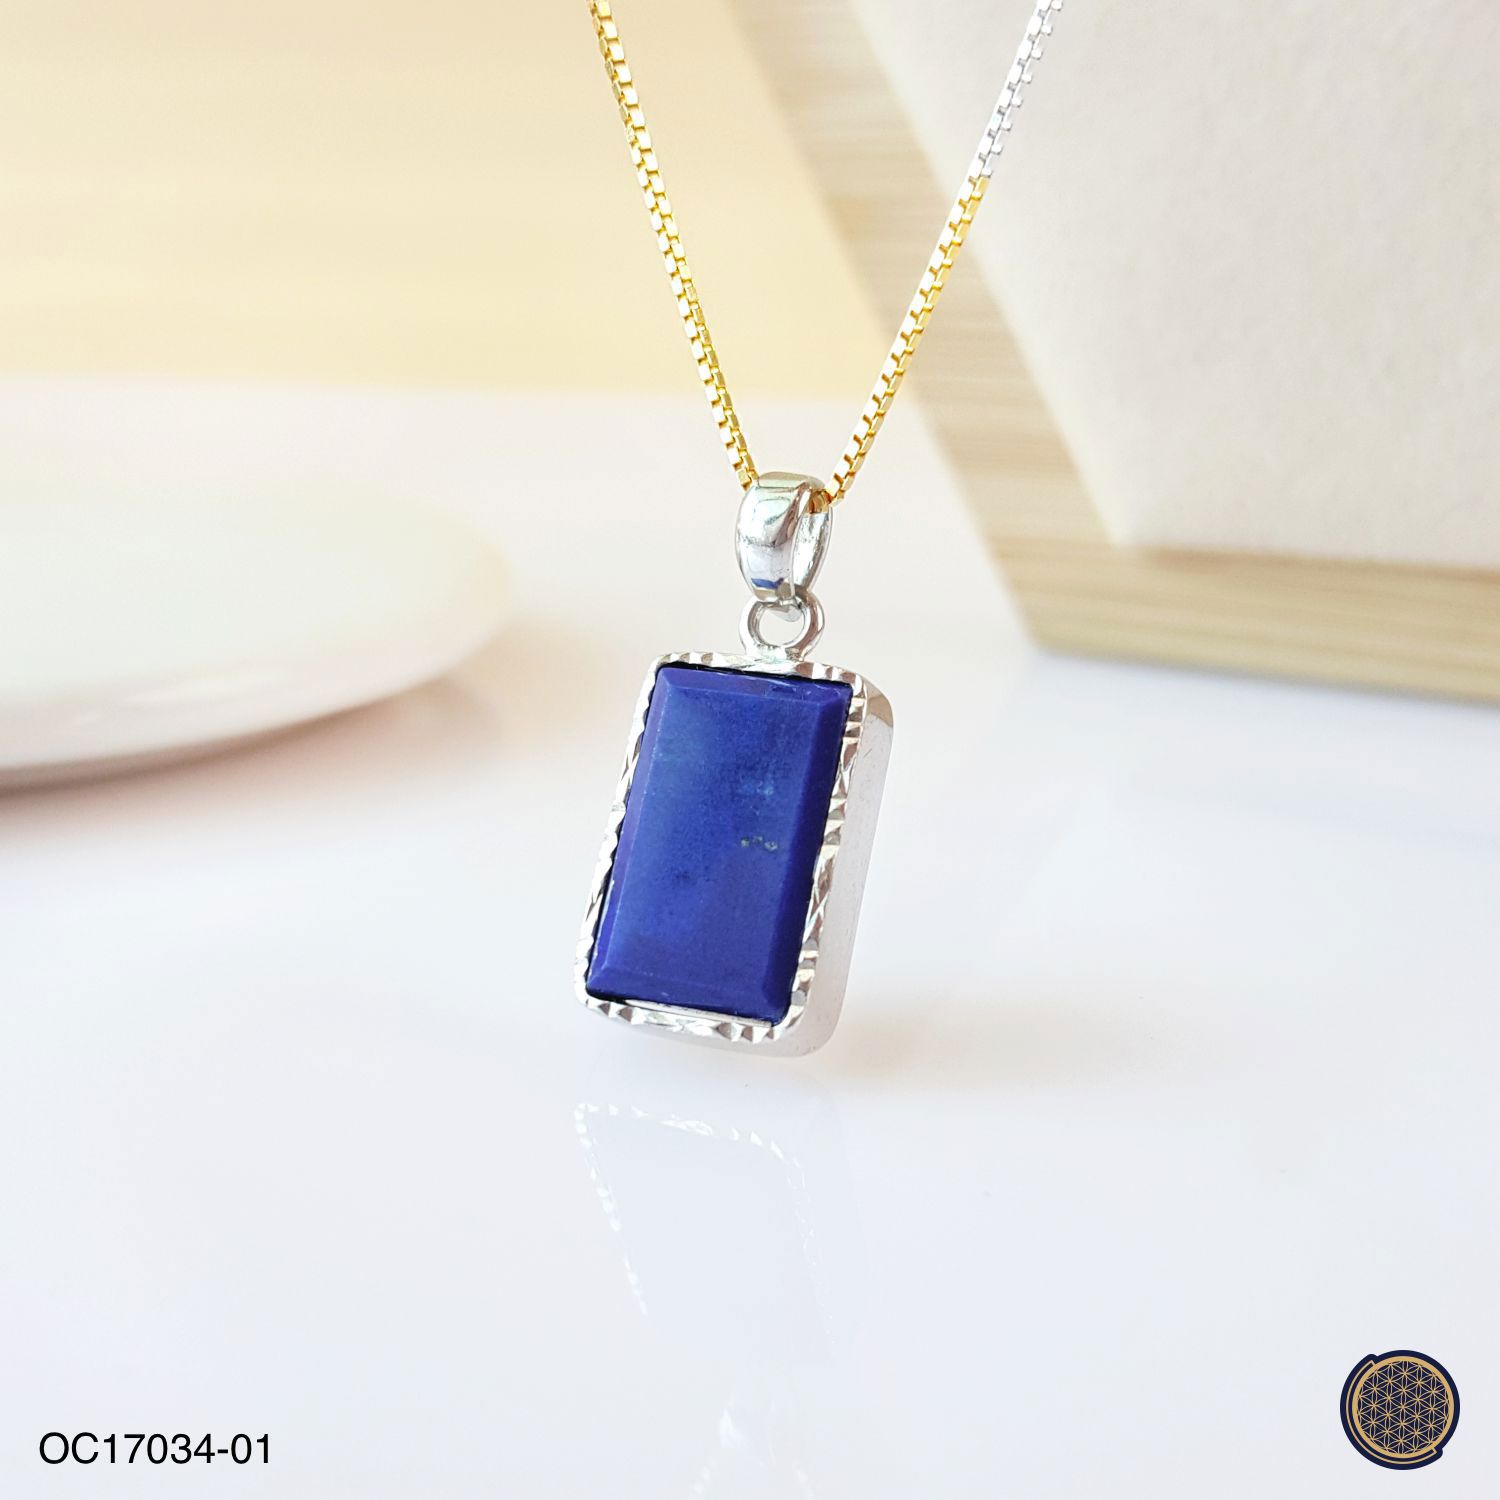 11mm x 24mm Lapis Lazuli Rectangle Shape Pendant (925) - Small  